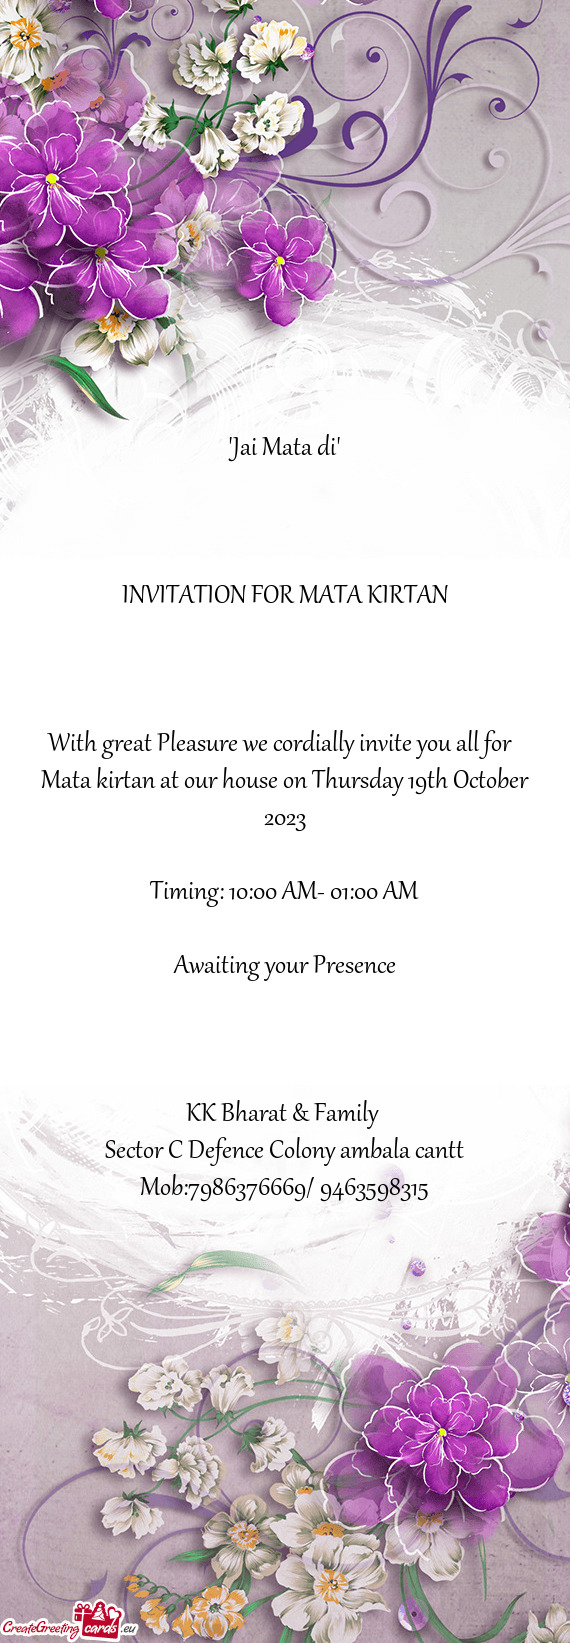 Mata kirtan at our house on Thursday 19th October 2023